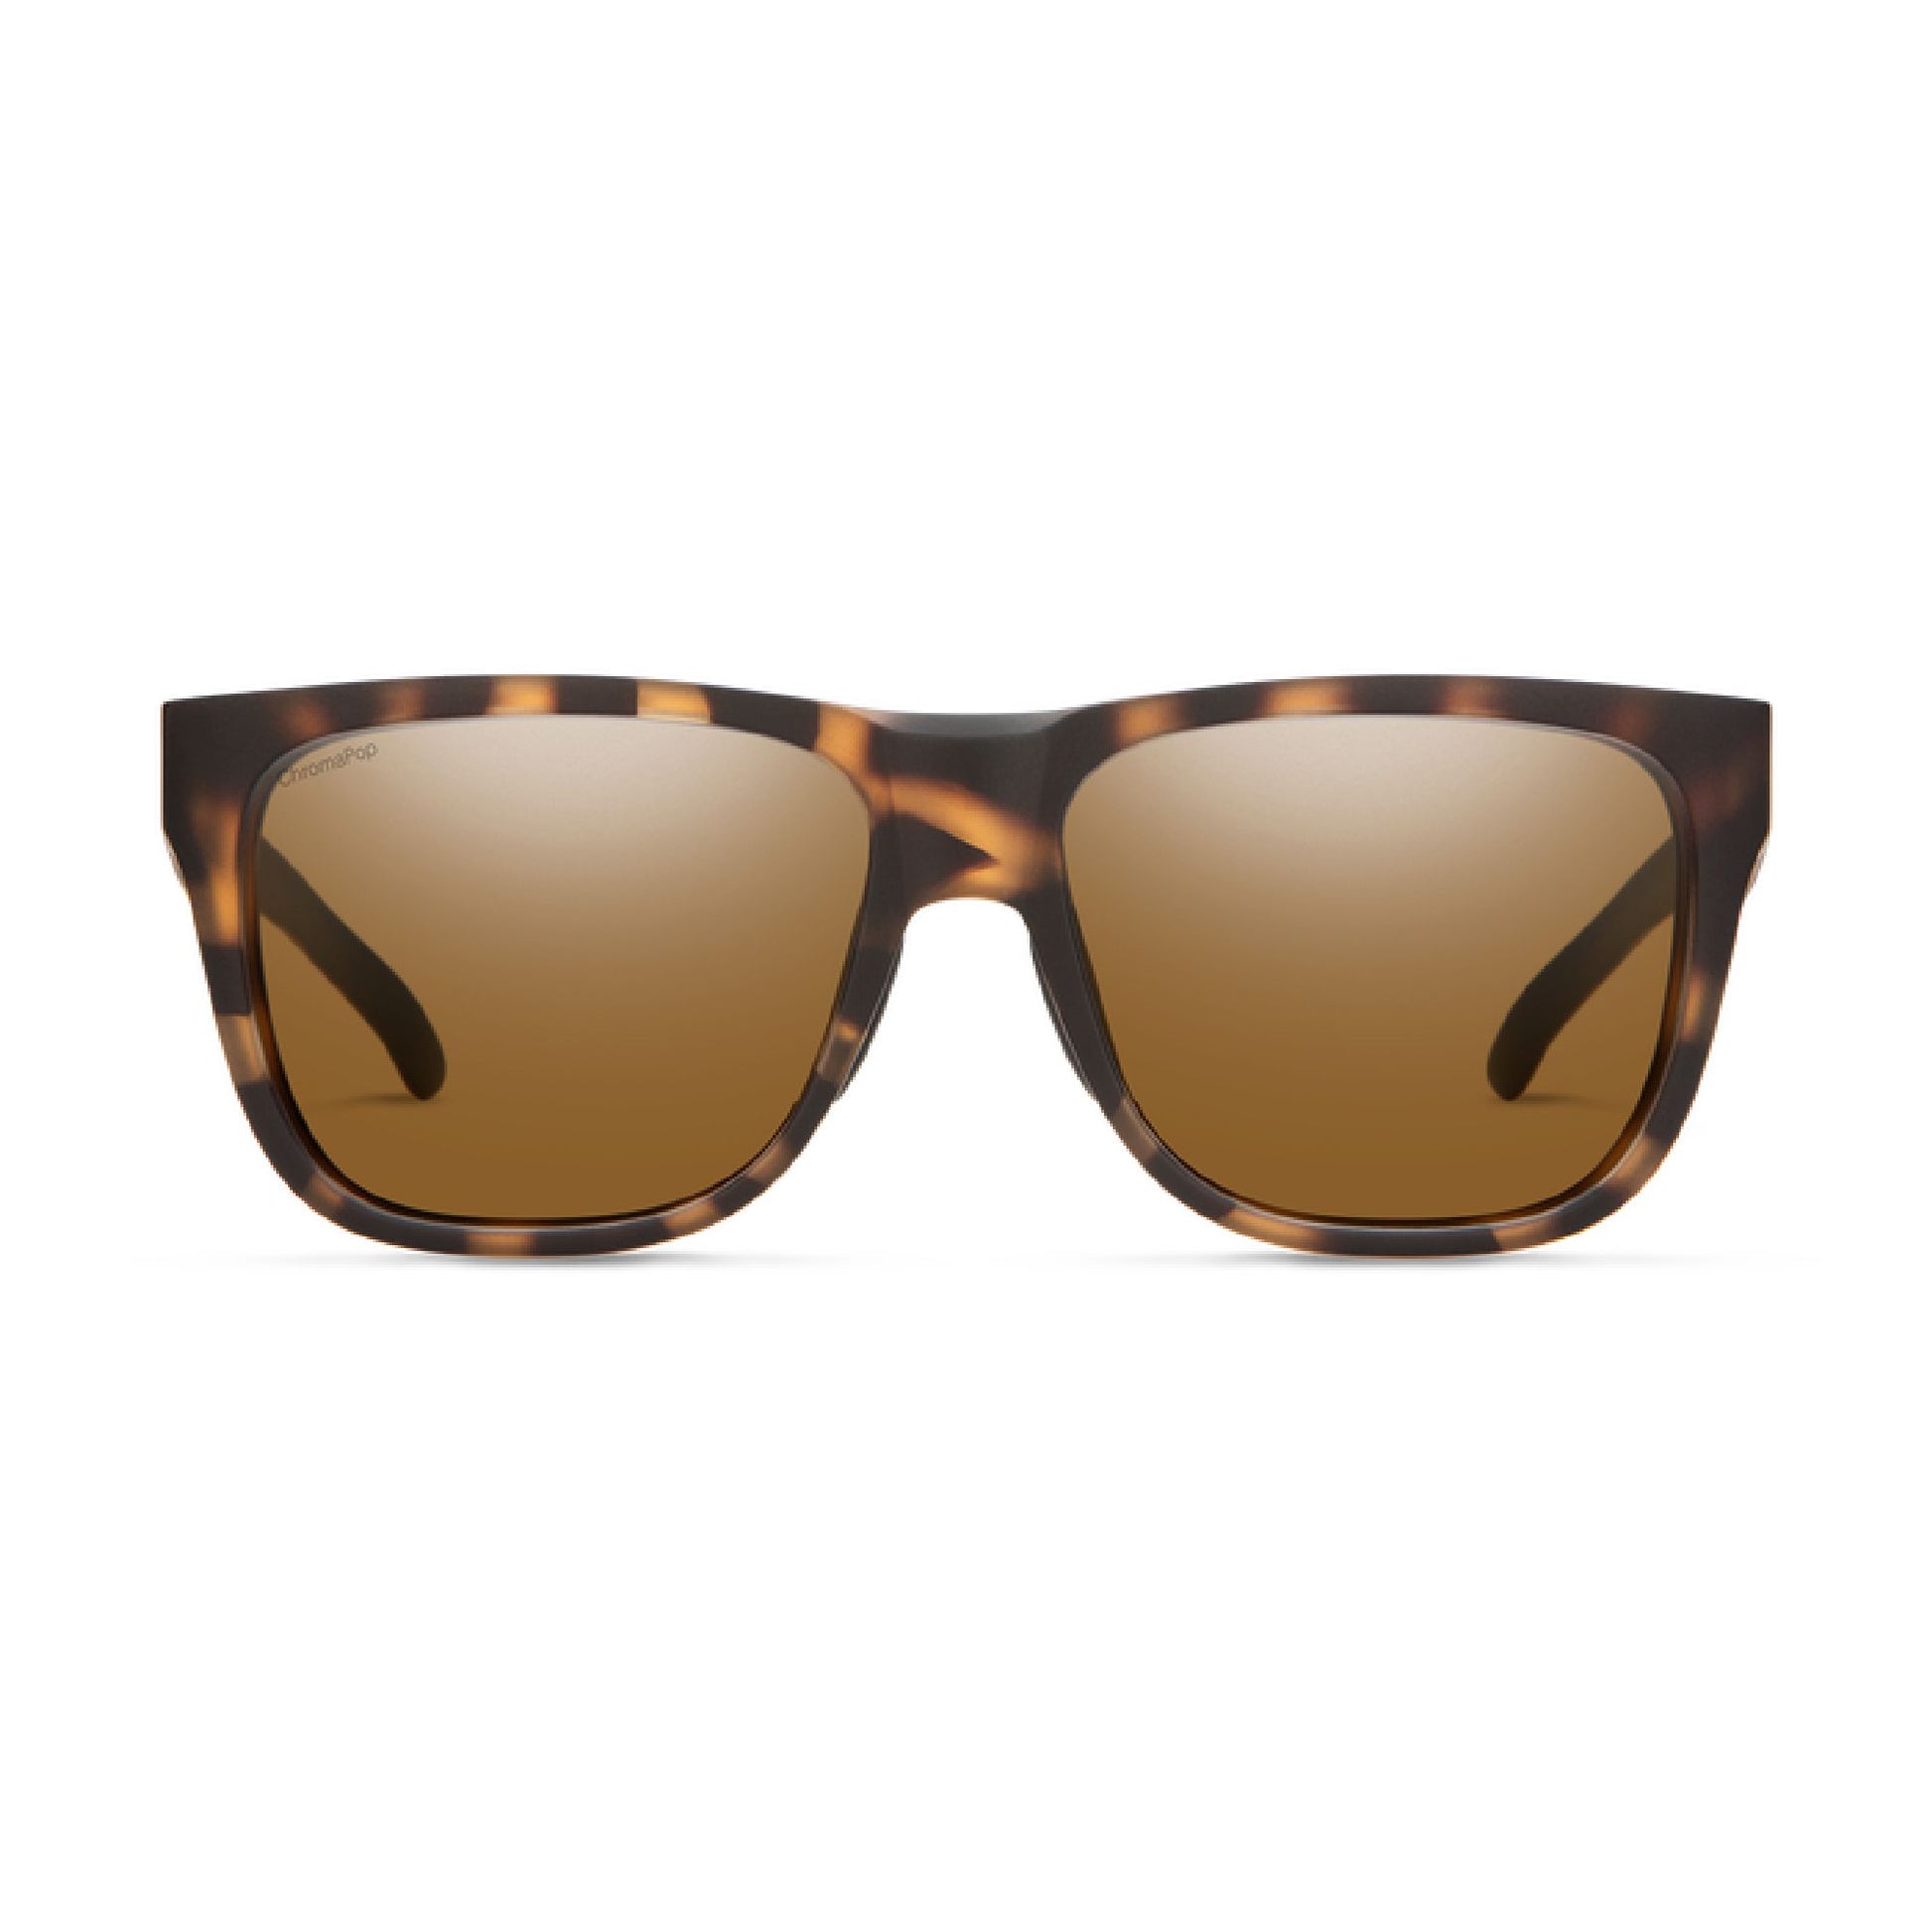 Smith Lowdown 2 Sunglasses Matte Tortoise / ChromaPop Polarized Brown Sunglasses